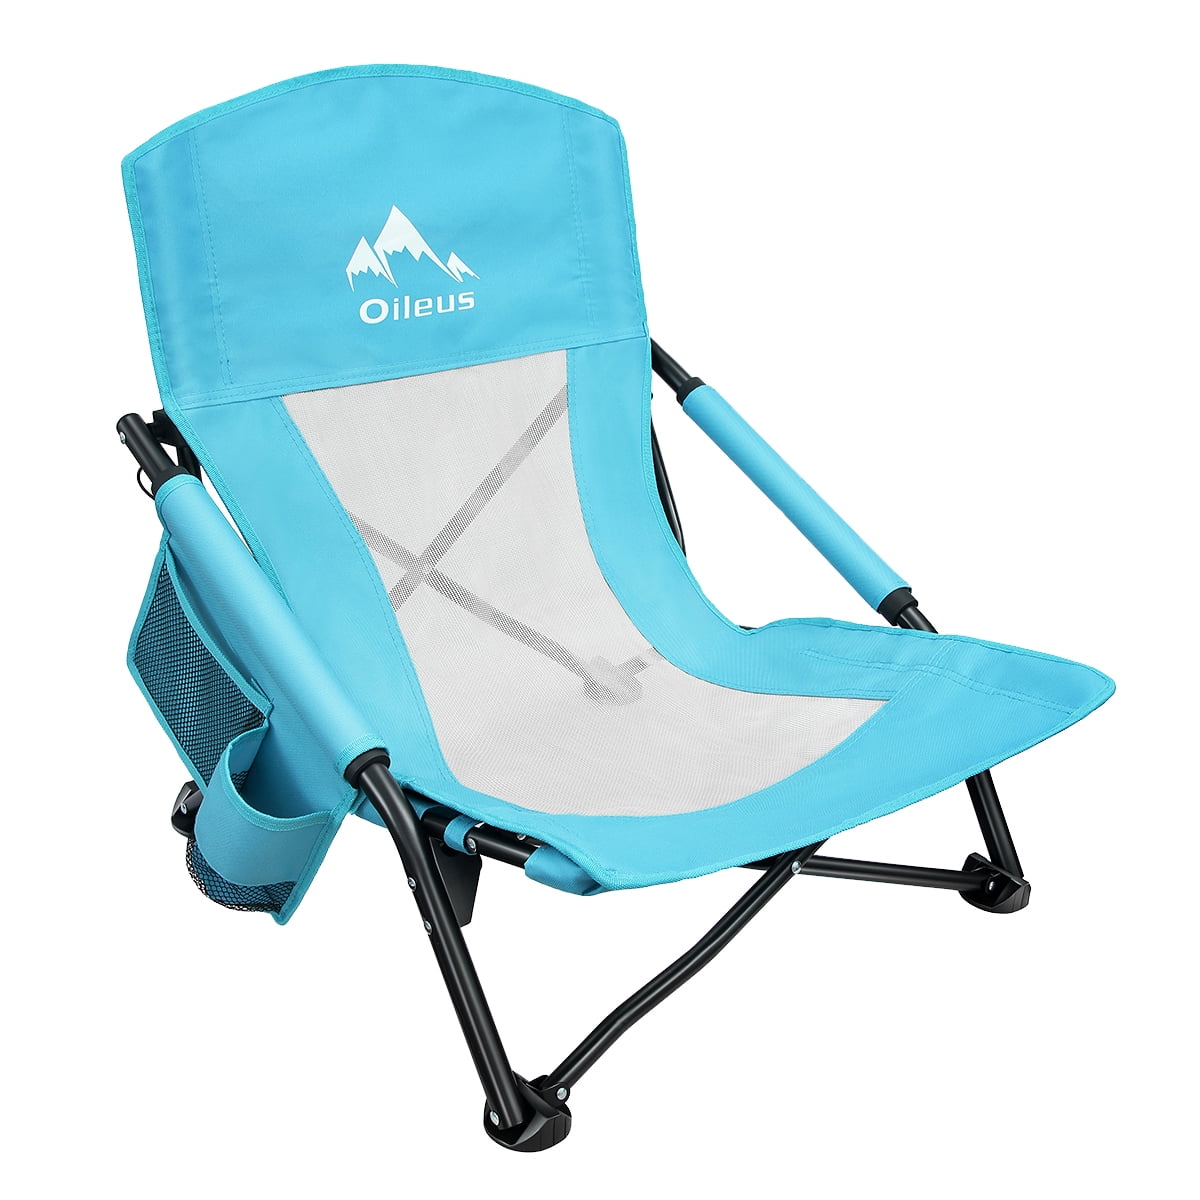 Custom Beach Chair Compact Travel Windproof Rainproof Foldable Umbrella 